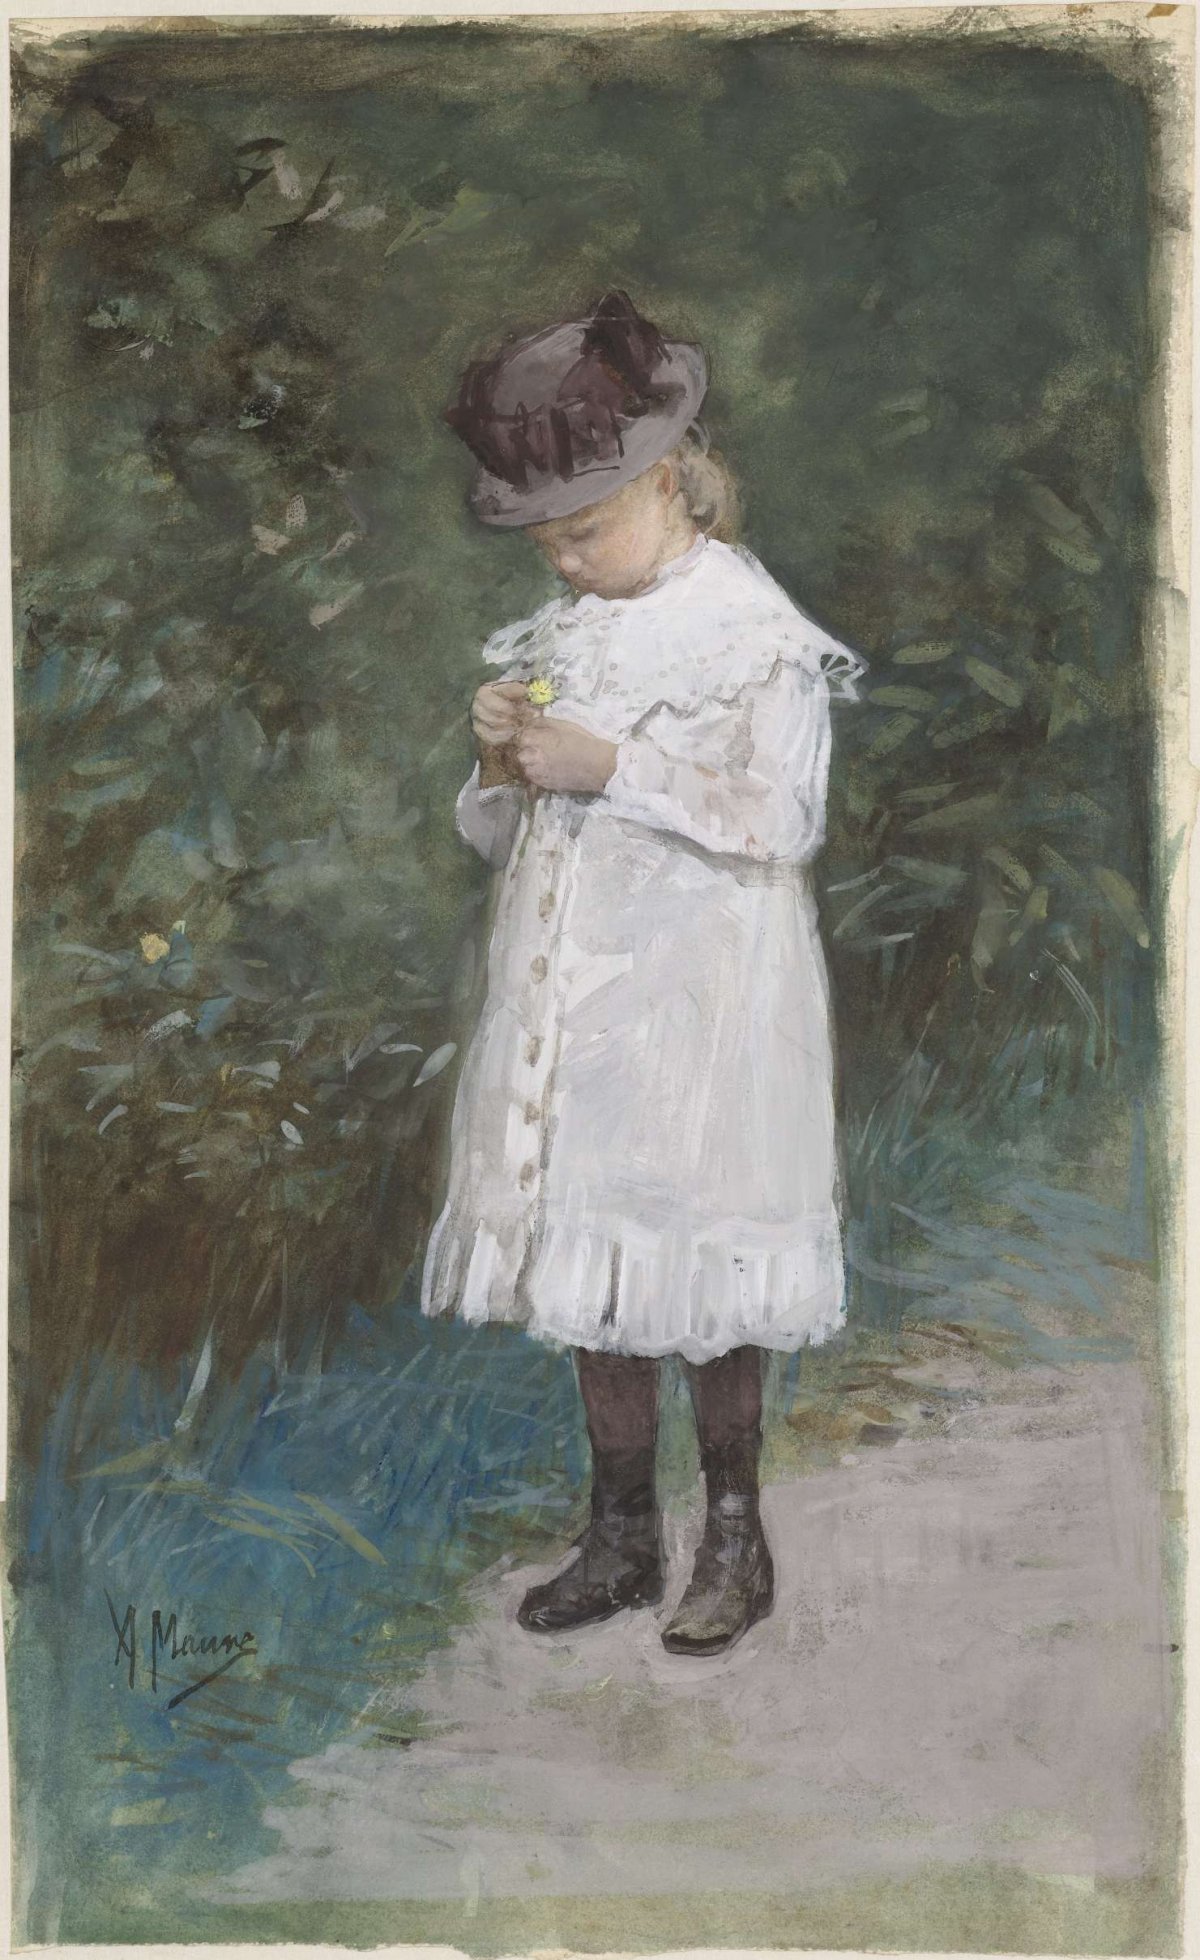 Elisabeth Mauve (b. 1875), Daughter of the Artist, Anton Mauve, 1875 - 1888